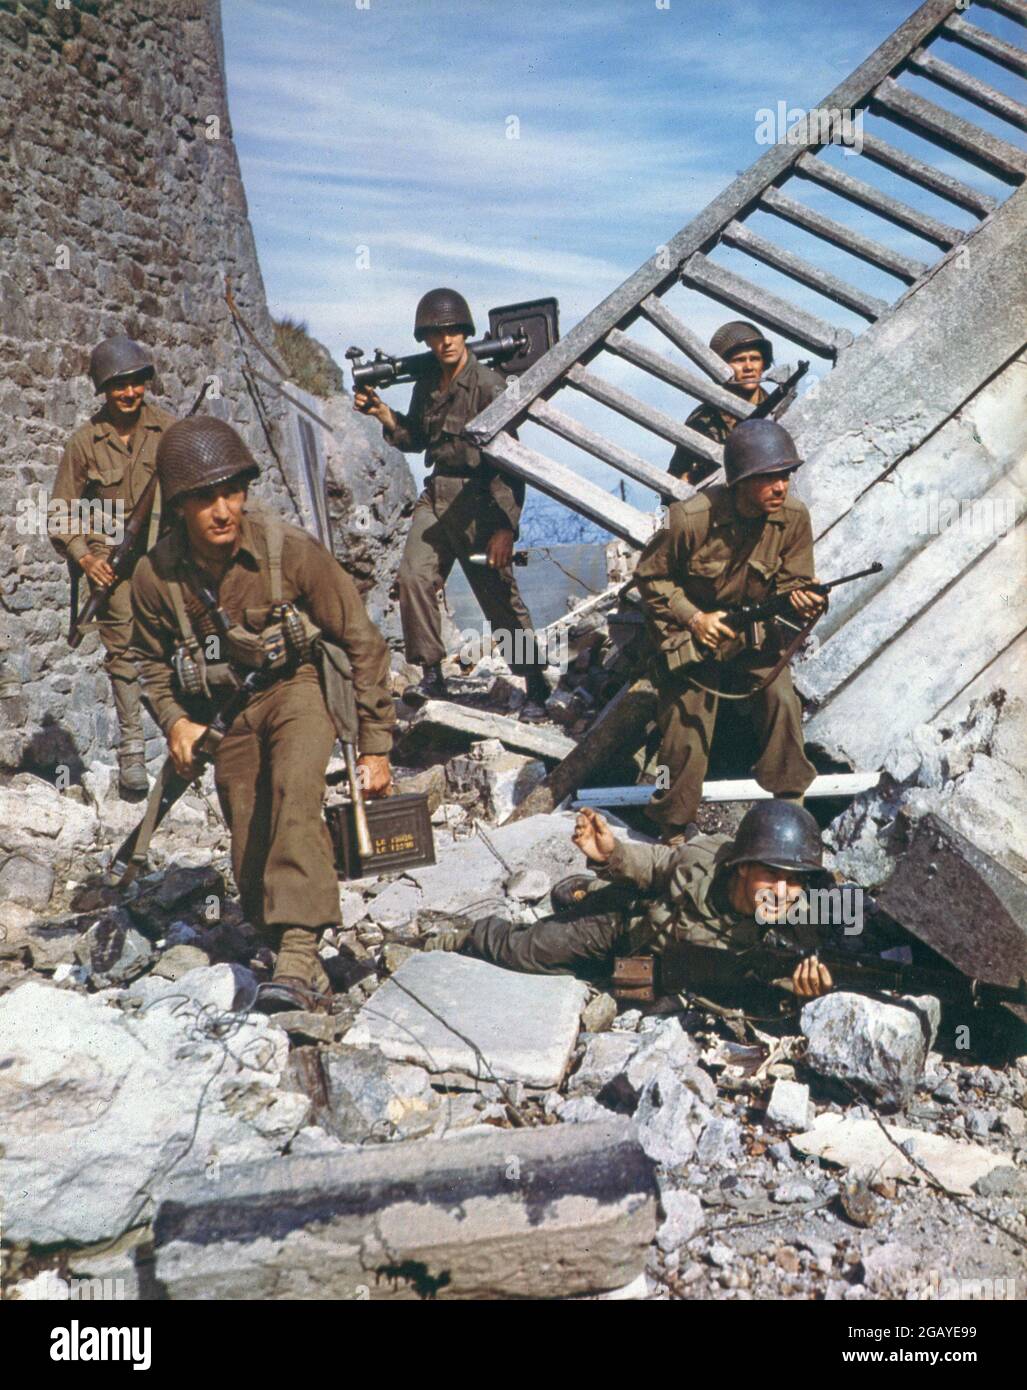 Guerra Mundial Dos Segunda Guerra Mundial color de la Segunda Guerra Mundial  soldados americanos en el campo de batalla entre ruinas Fotografía de stock  - Alamy